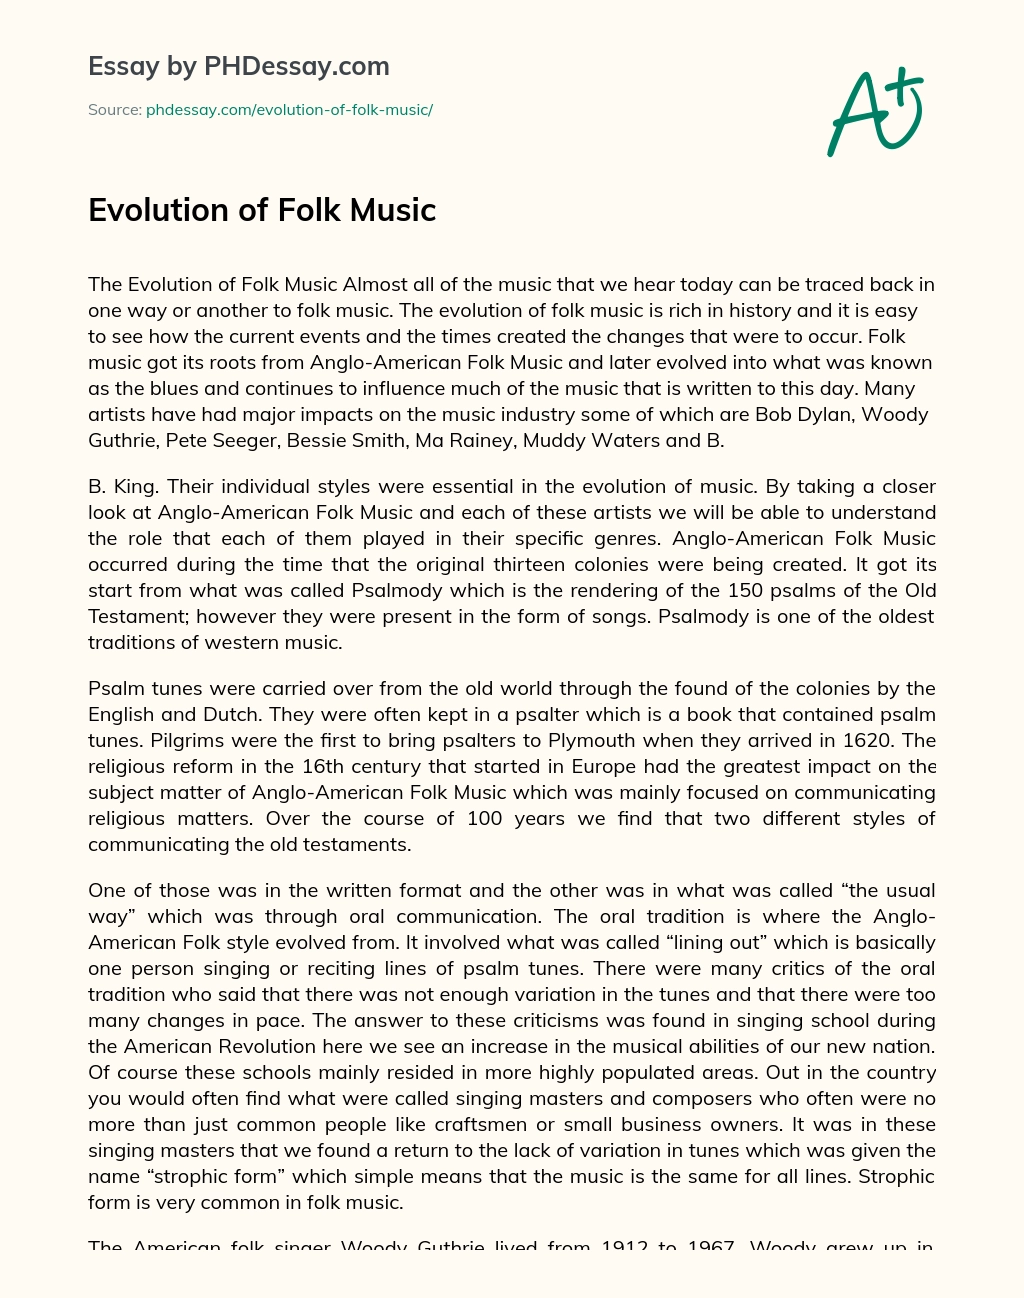 Evolution of Folk Music essay